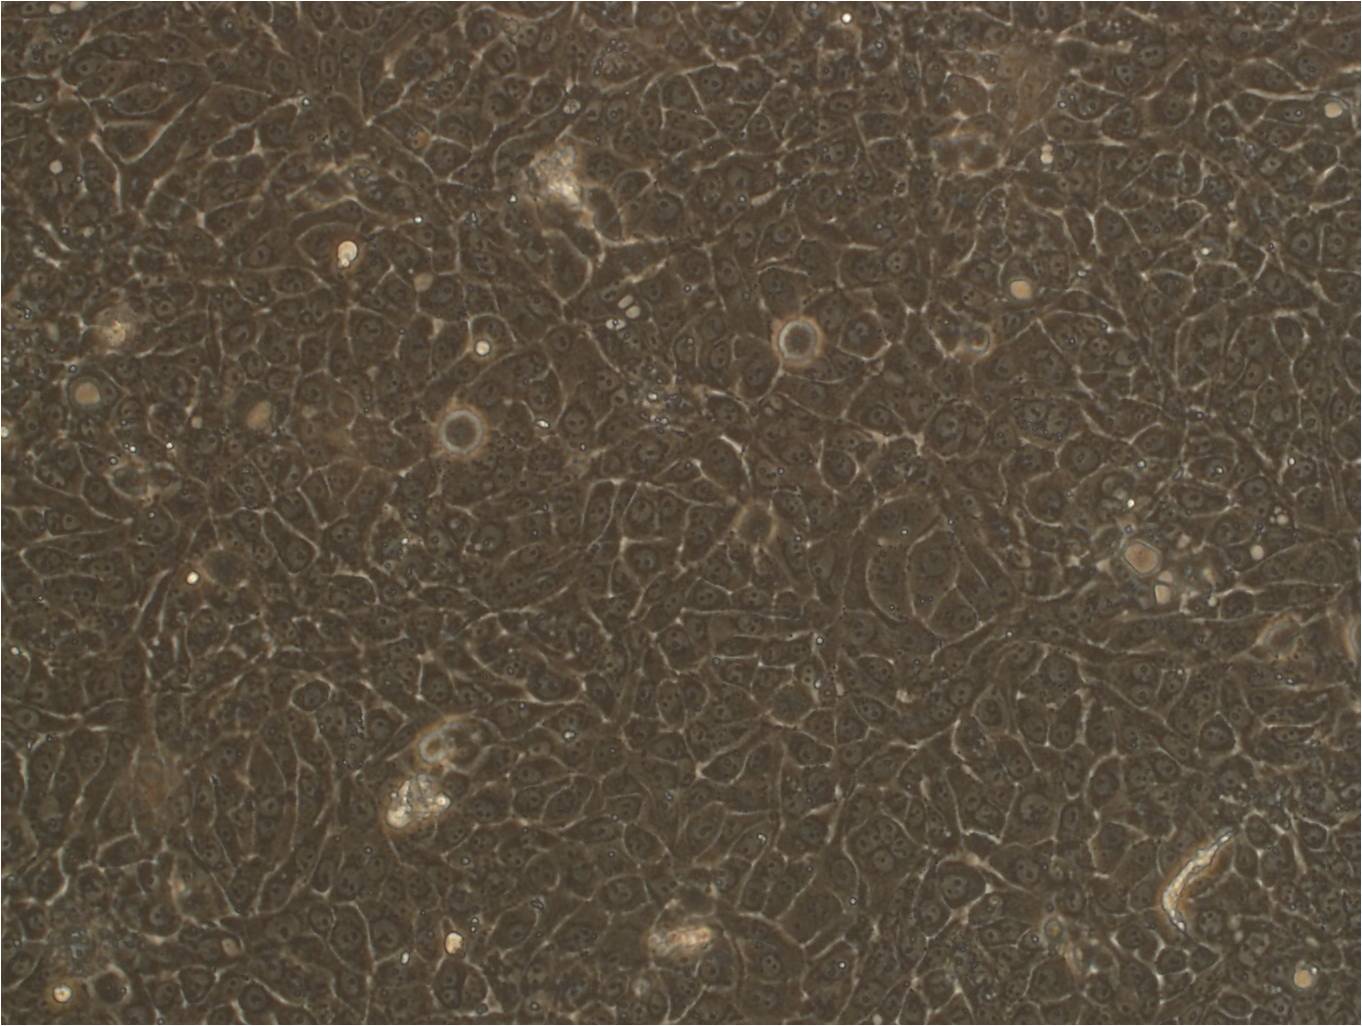 SVEC4-10 epithelioid cells小鼠淋巴结血管上皮样细胞系,SVEC4-10 epithelioid cells